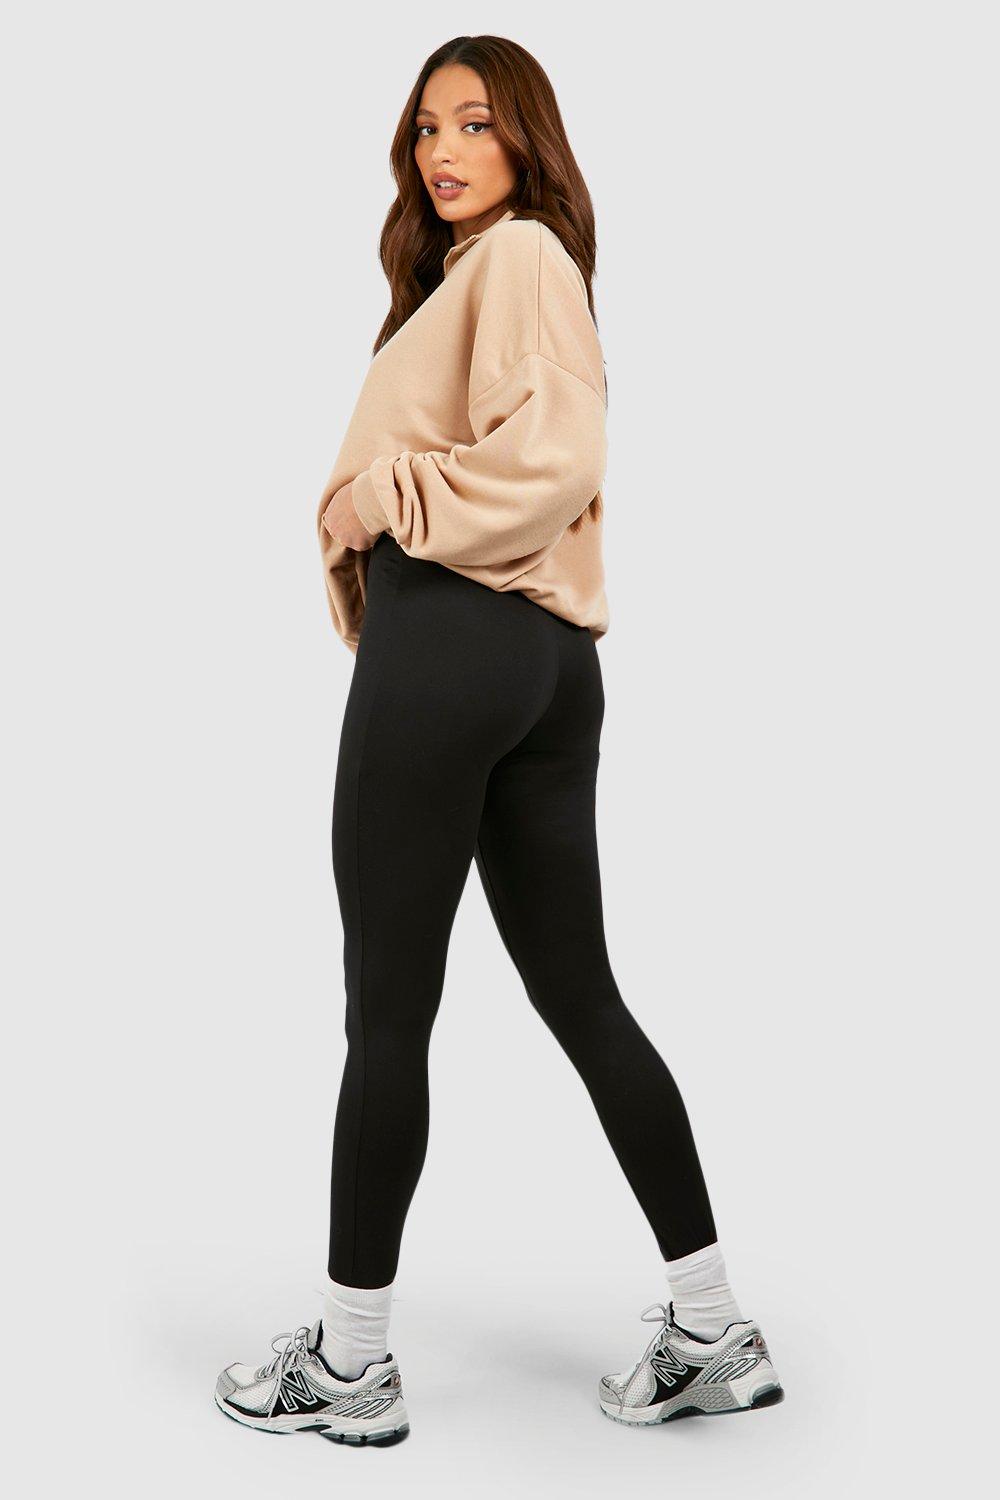 https://media.boohoo.com/i/boohoo/gzz71131_black_xl_1/female-black-tall-super-soft-jersey-knit-high-waisted-leggings